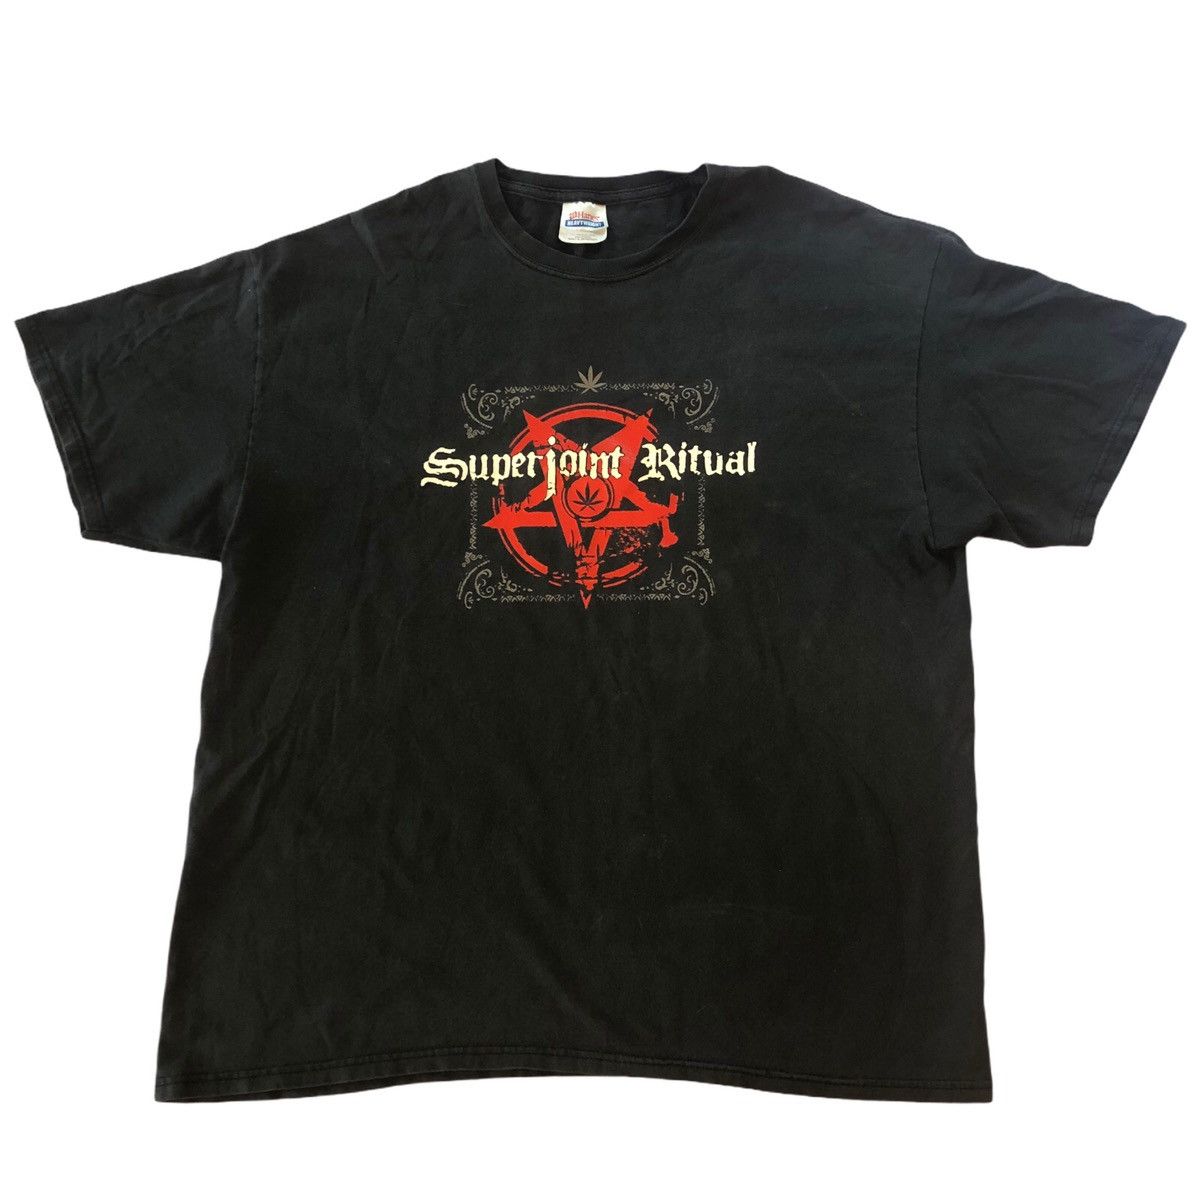 Vintage Superjoint Ritual x Pentagram x Tour Shirt x 90s | Grailed